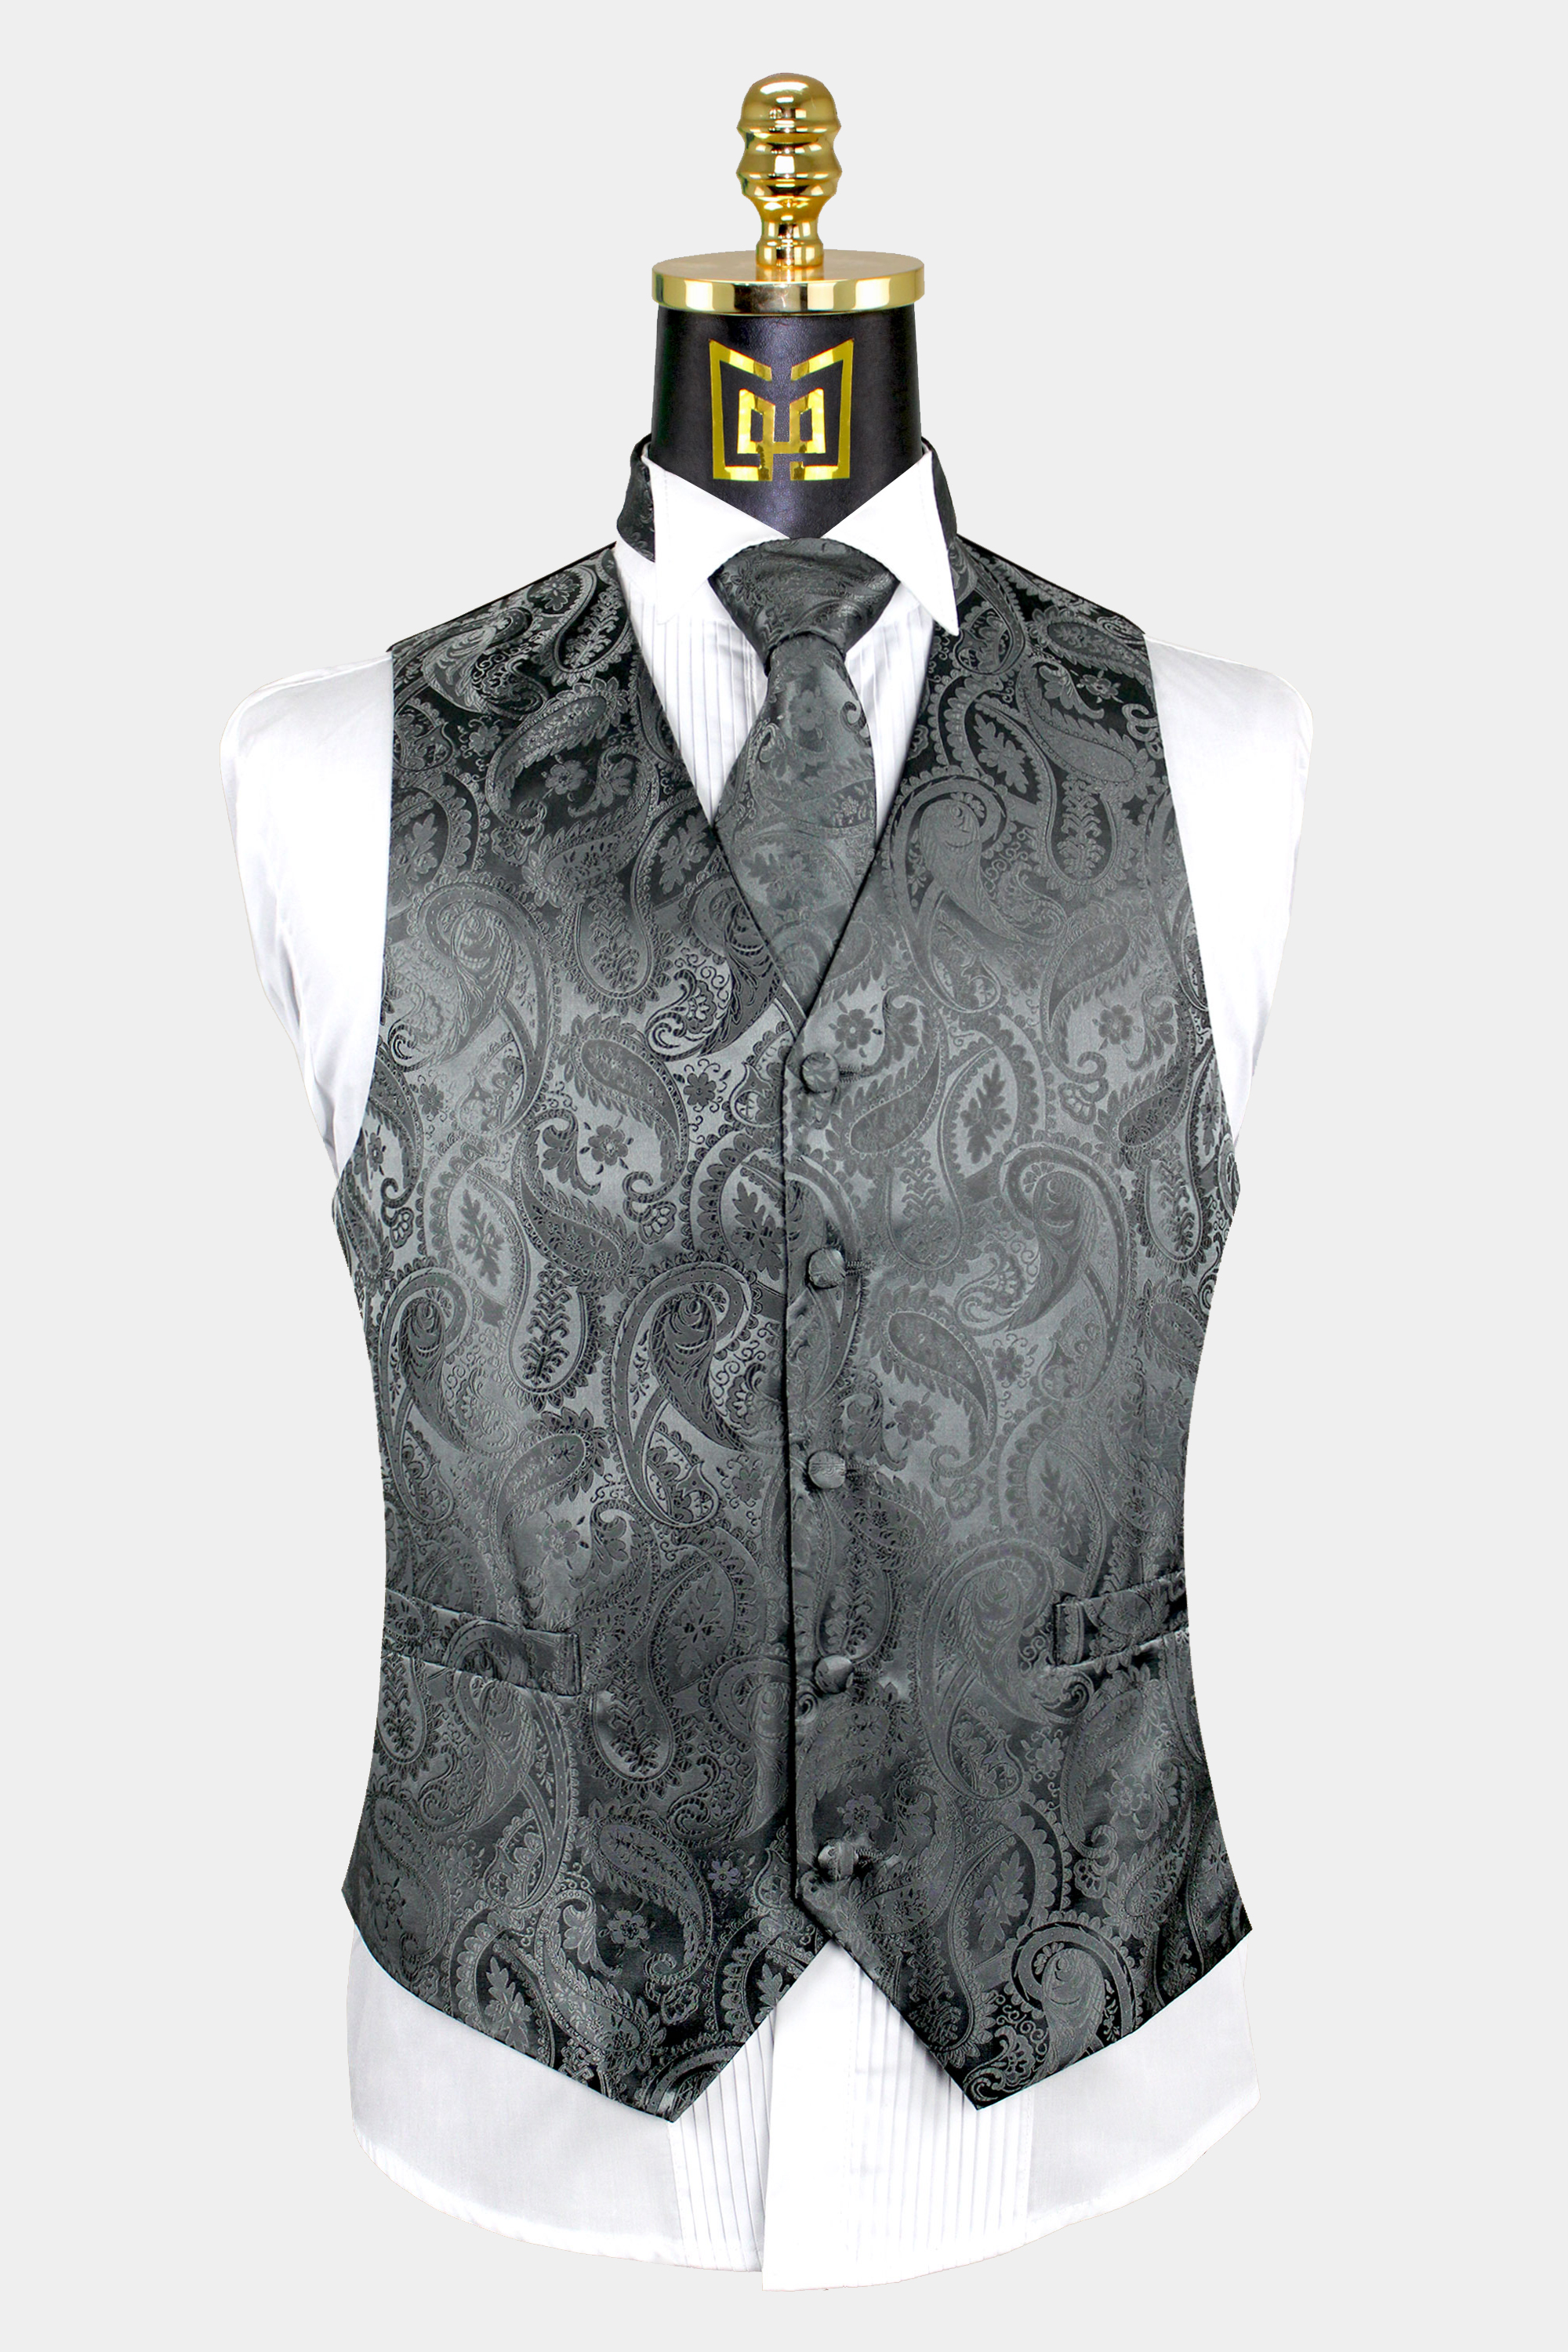 Men's Paisley Design Dress Vest & NeckTie SILVER GREY Color Gray Neck Tie Set 